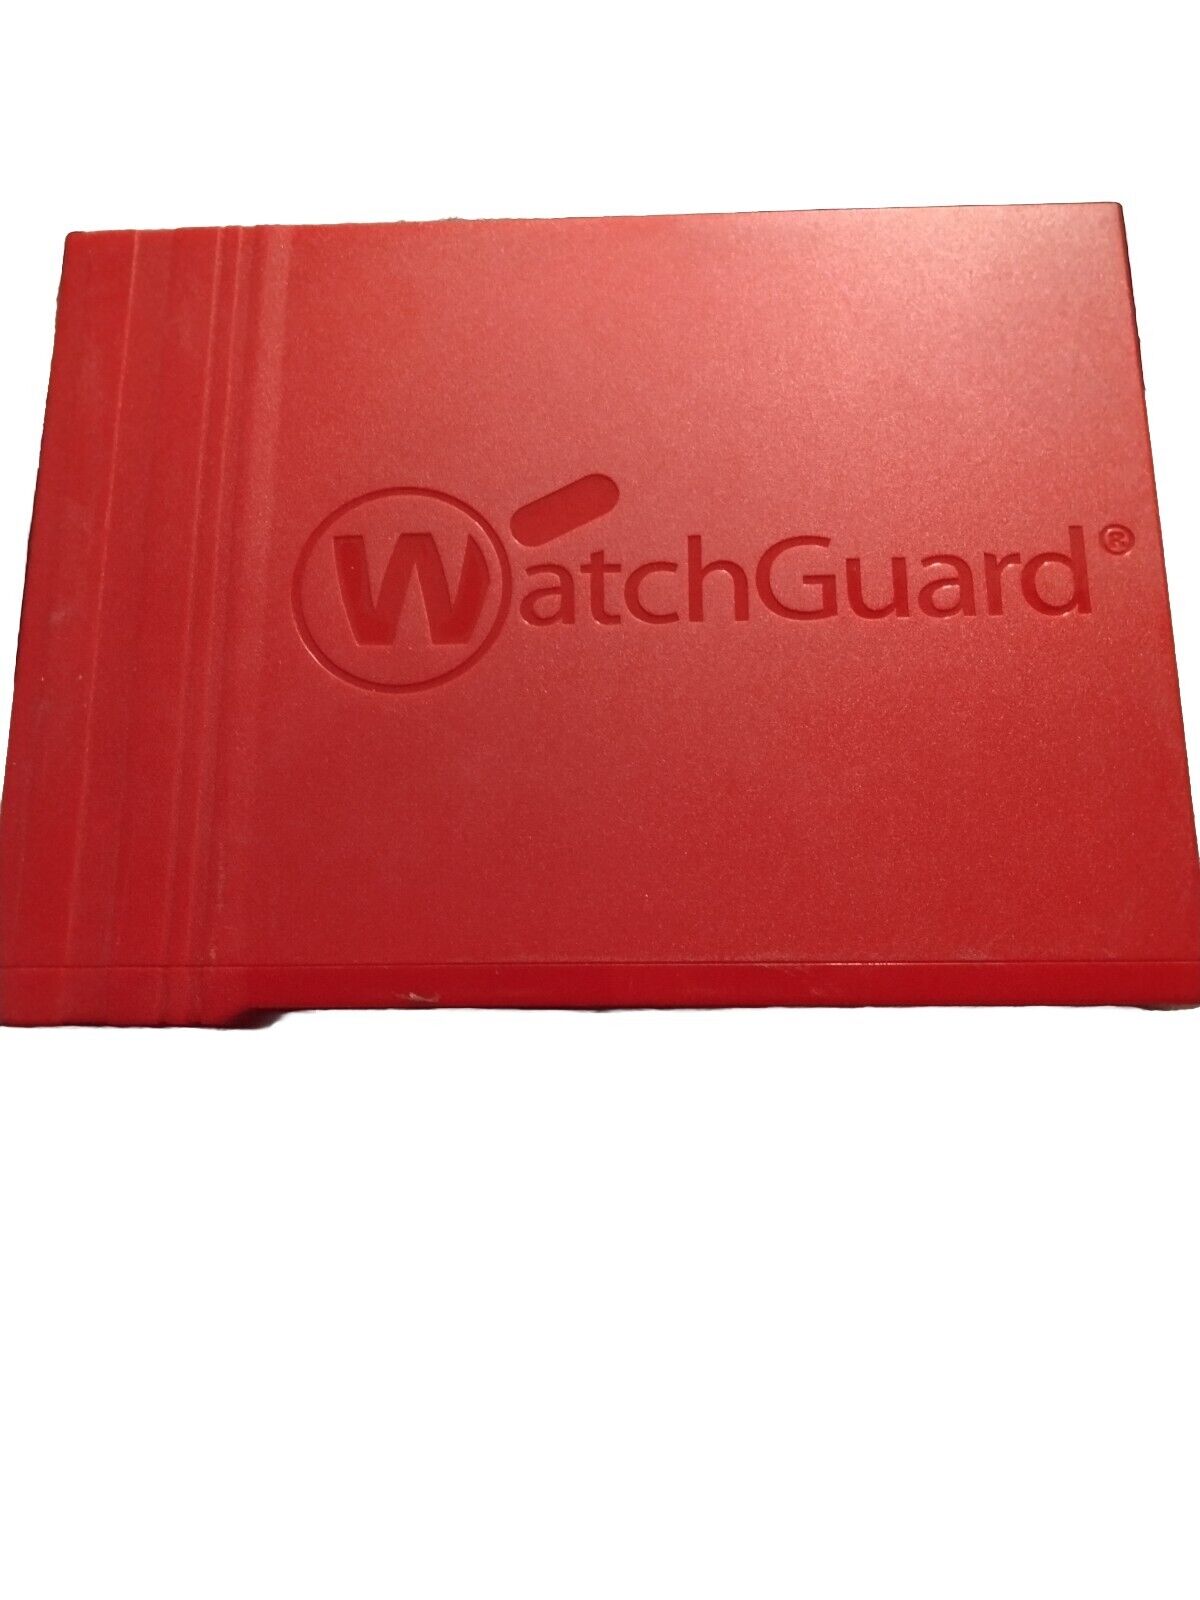 Watchguard HW Model Number BS 3ae5